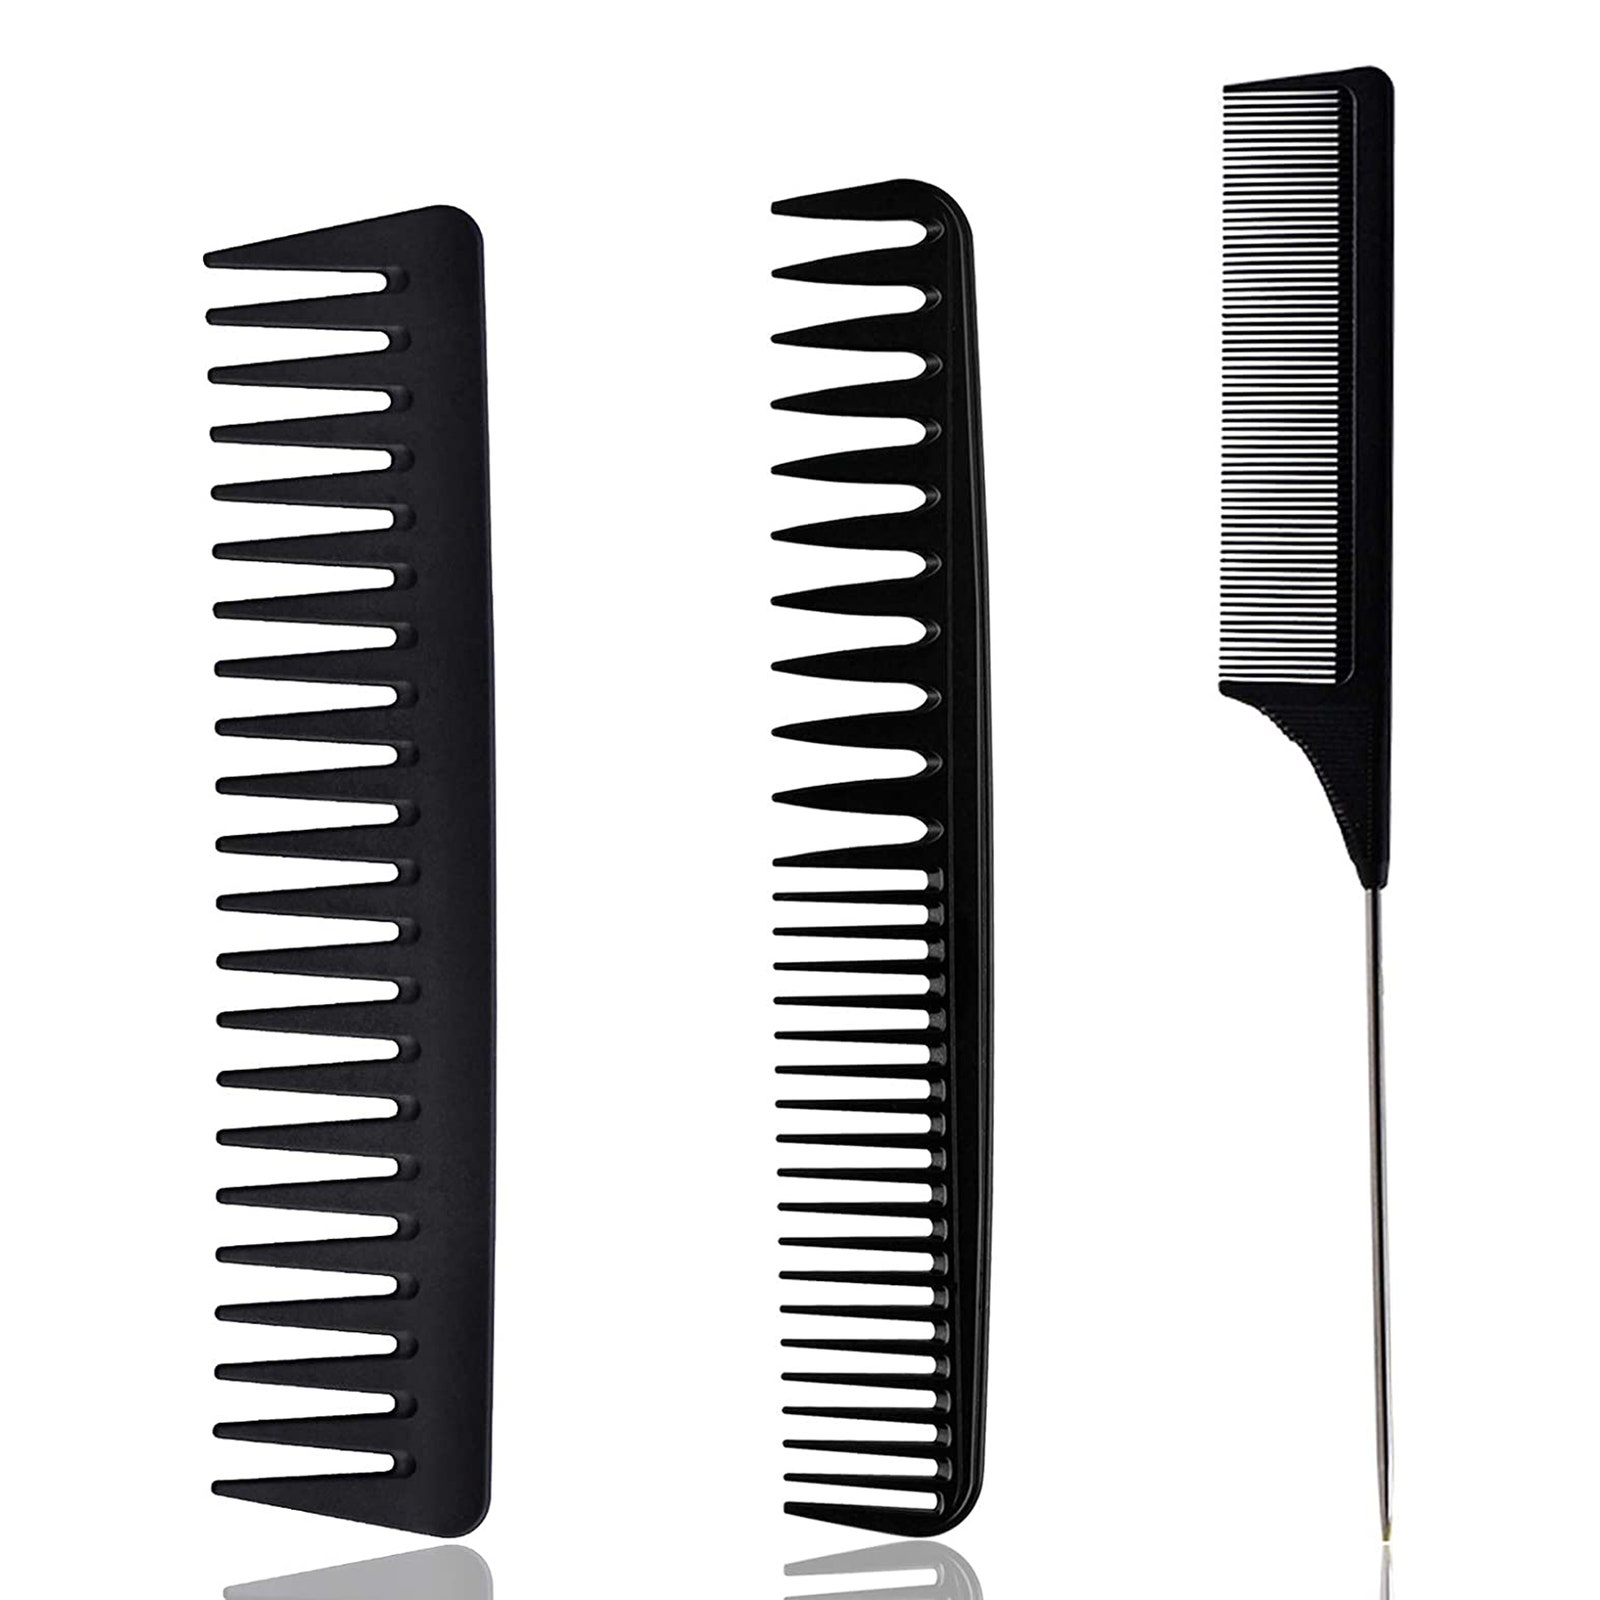 3 Pieces Hair Comb Set 2.69 Amazon